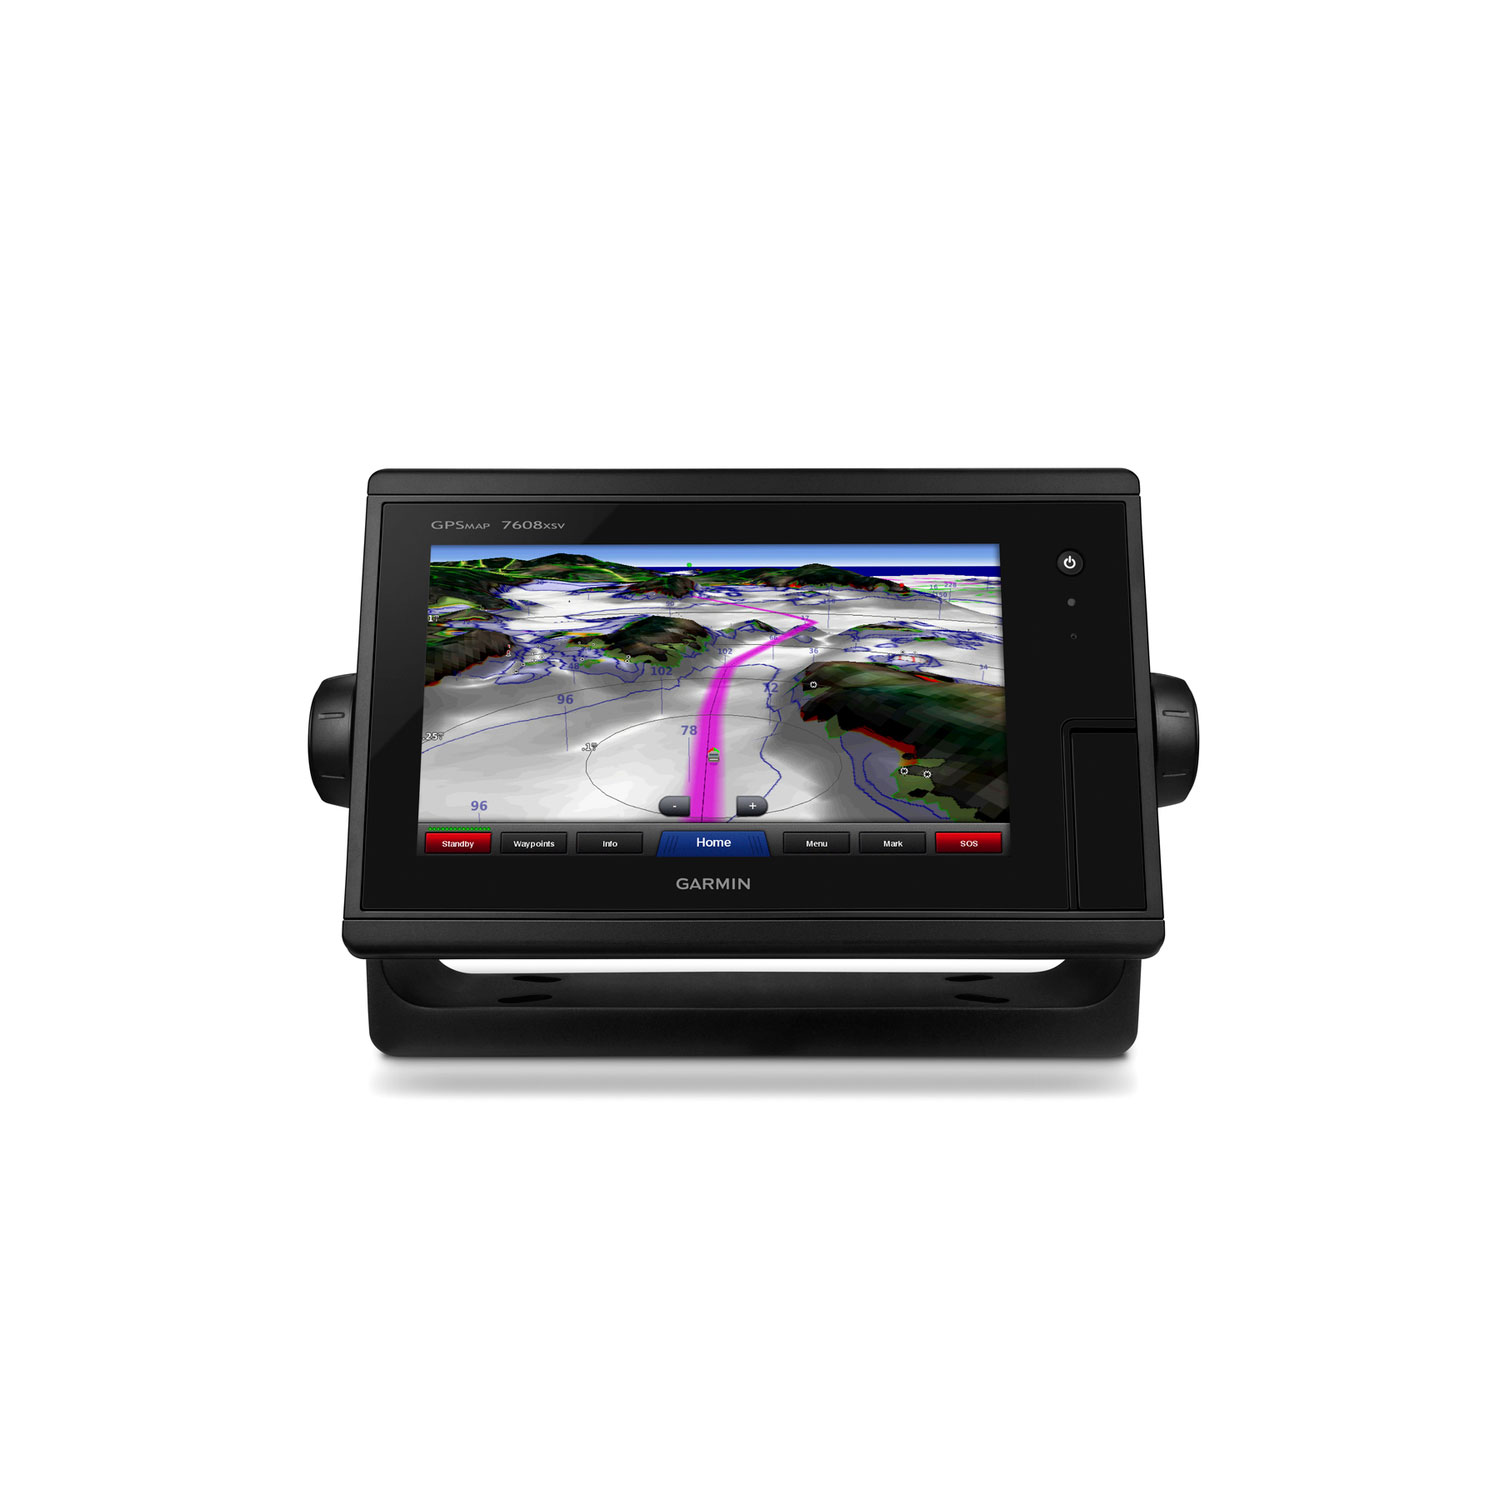 GPSMAP 7608xsv Multifunction Display with U.S. BlueChart g2 Coastal and LakeVu HD Inland | West Marine